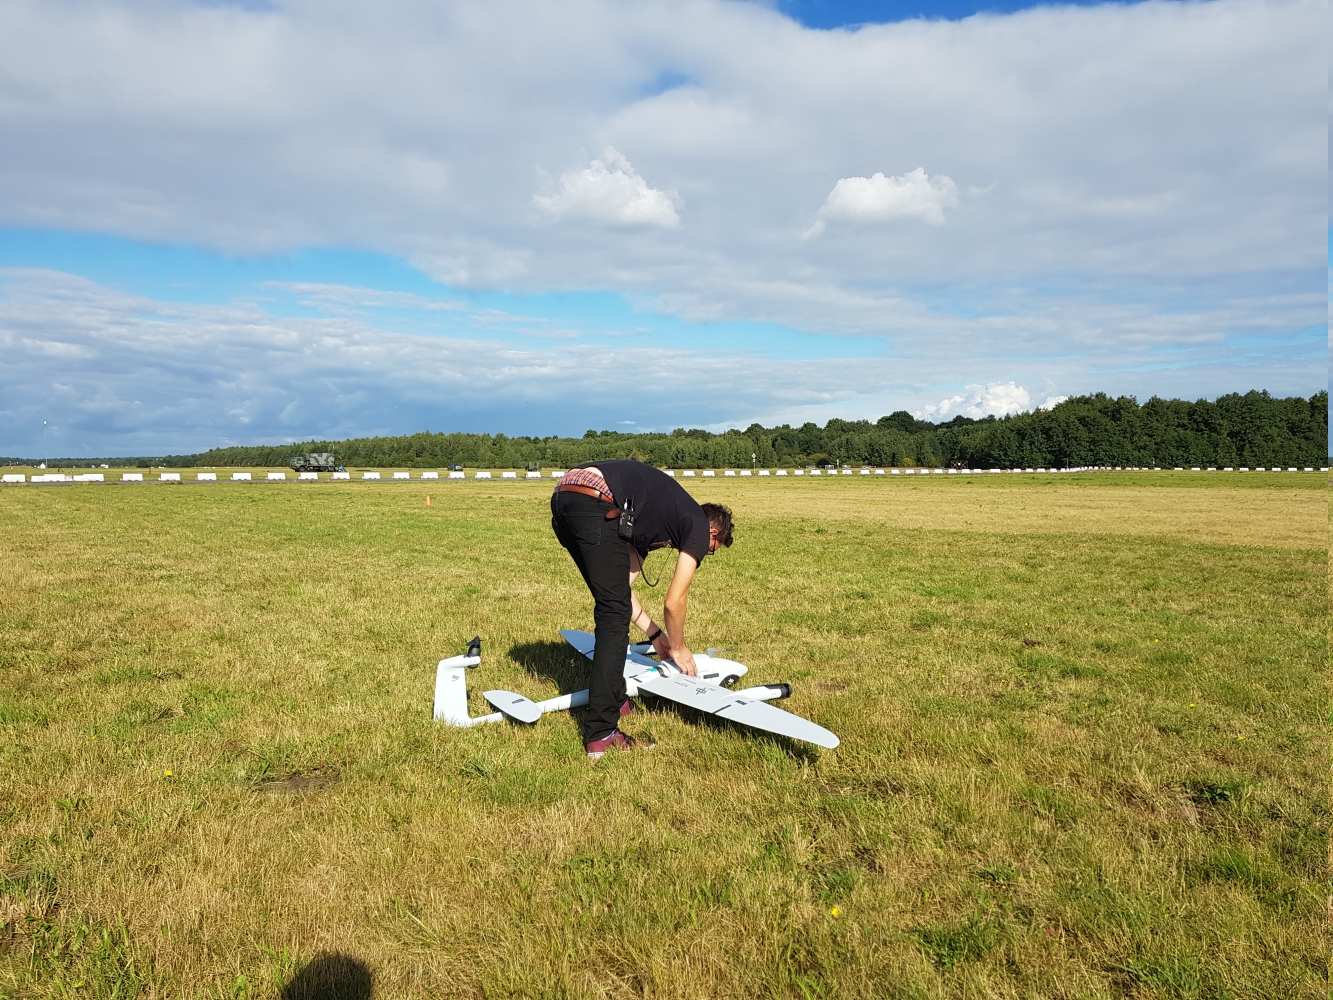 DLR drone gets prepared for flight